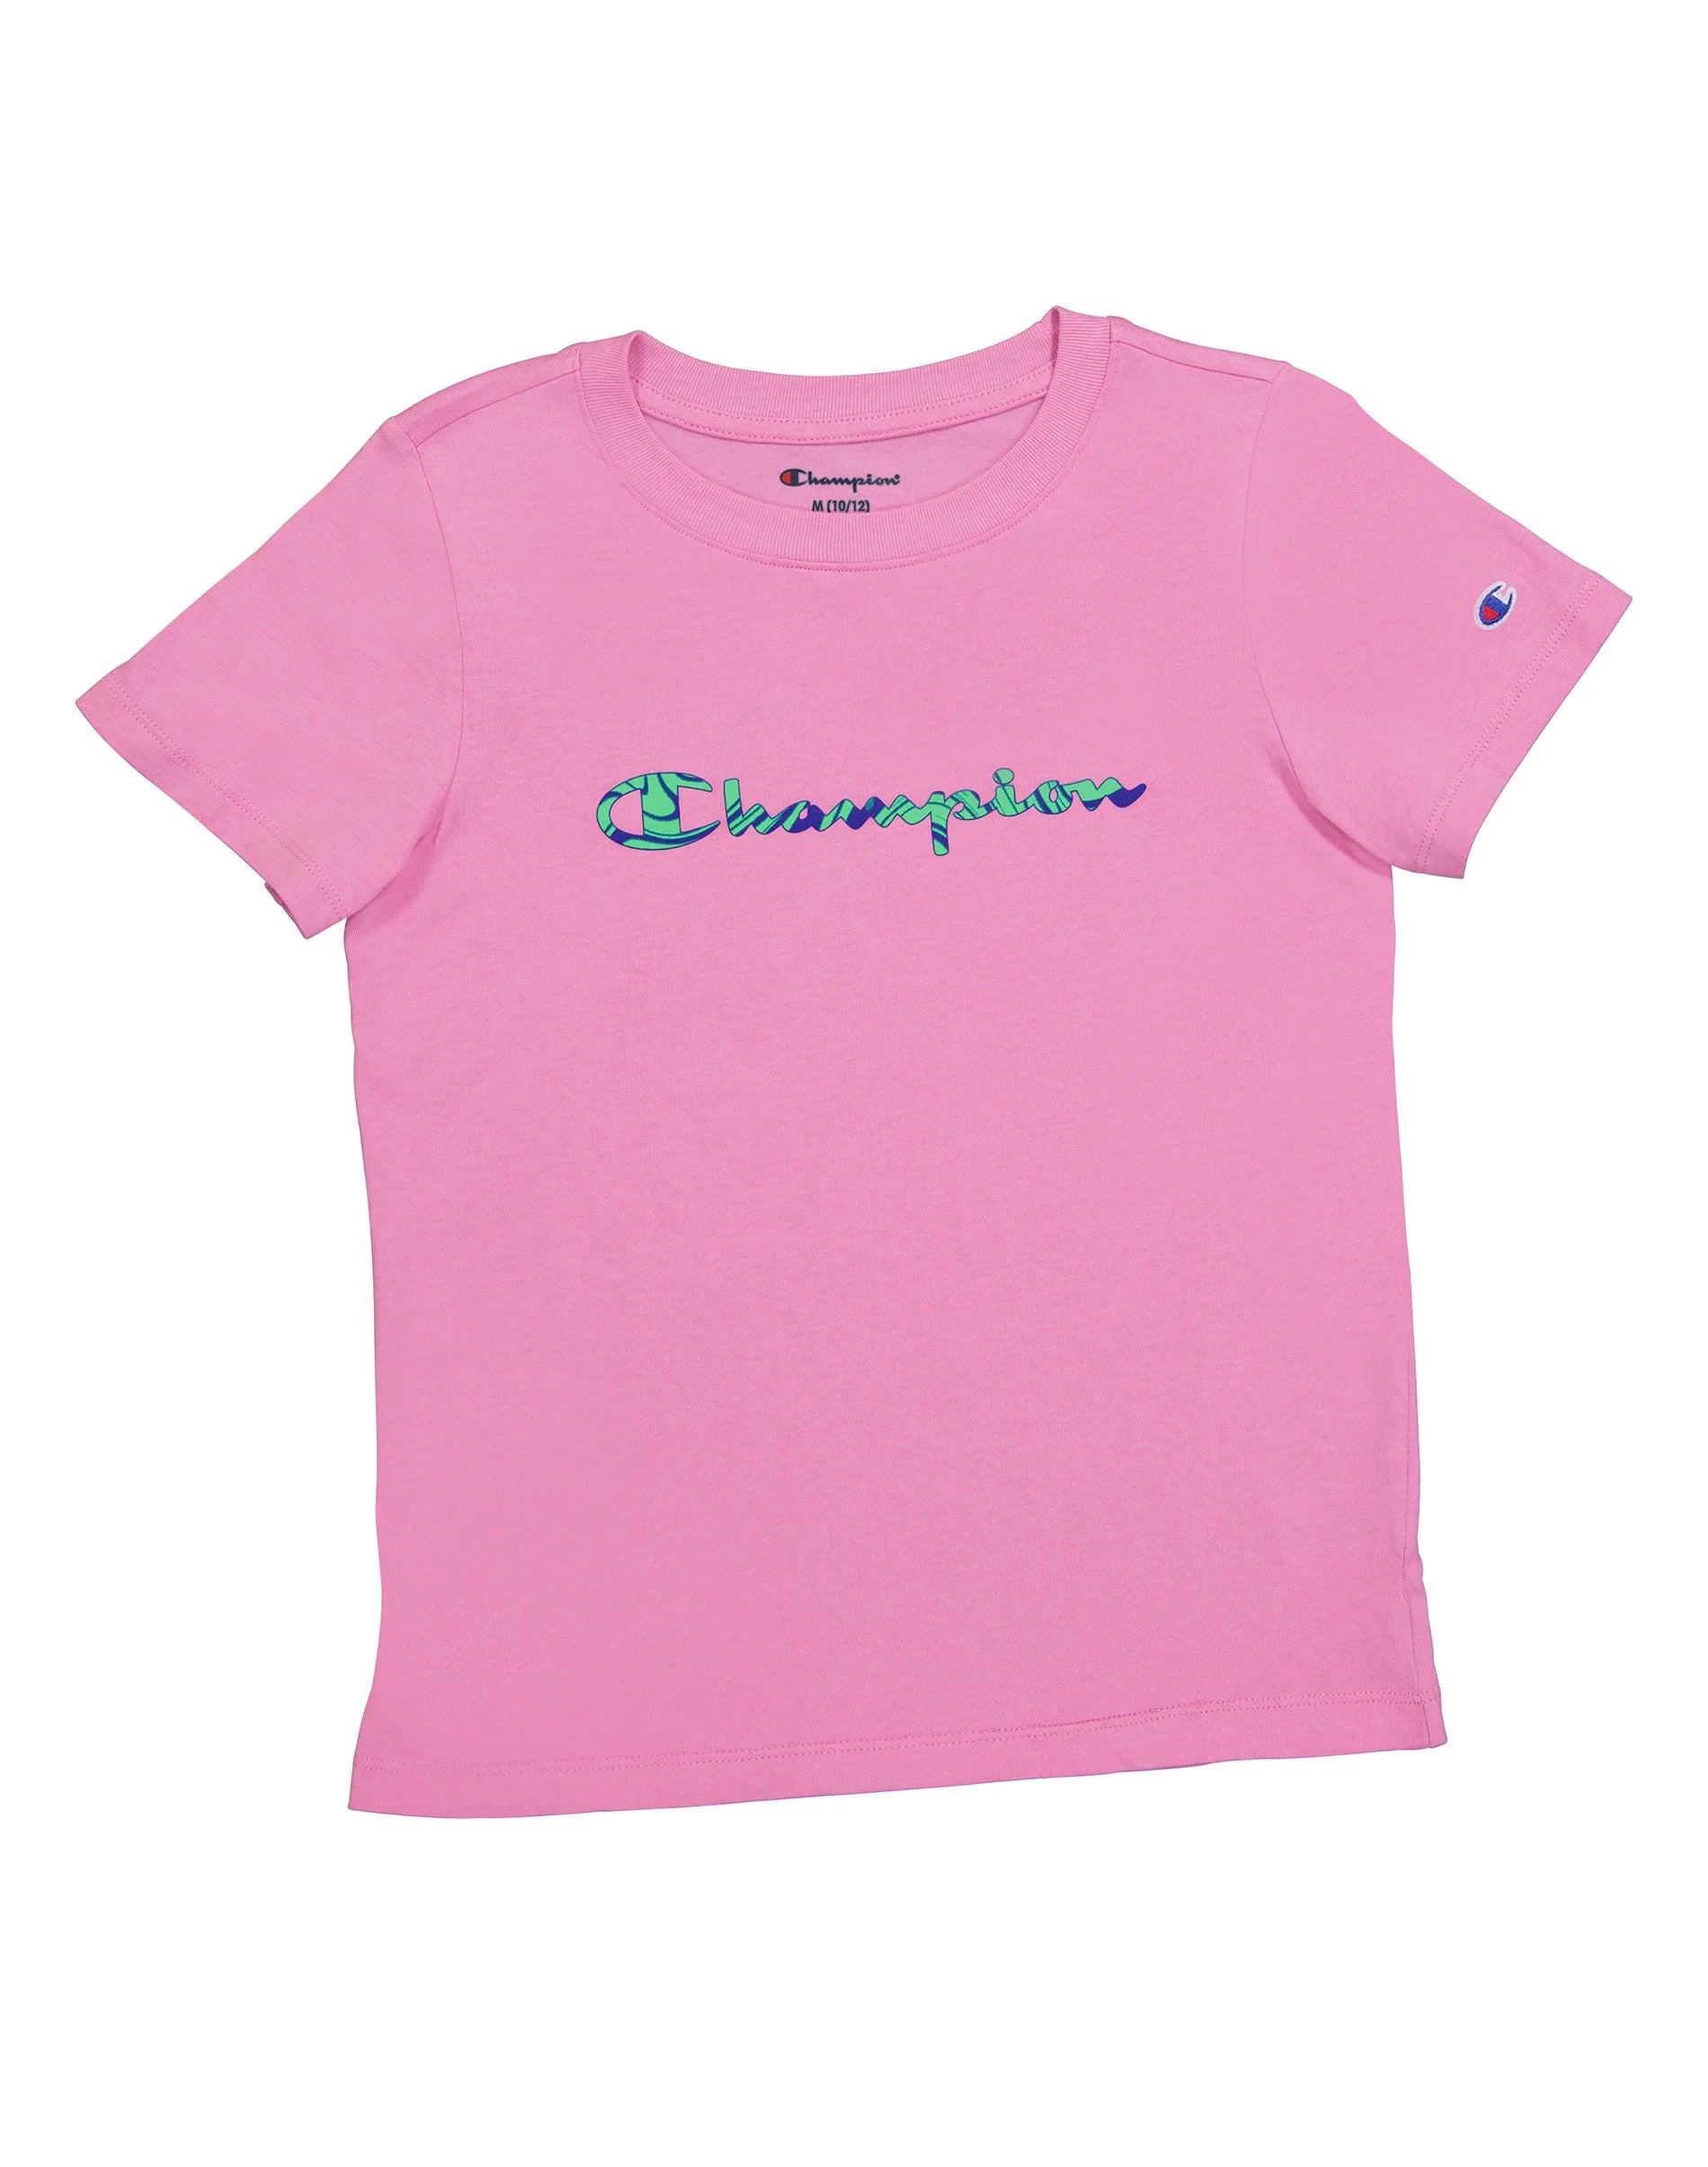 Champion Girls Athletic Wear Shirt Skort Outfit Tennis Practice Pink Blk  10/12